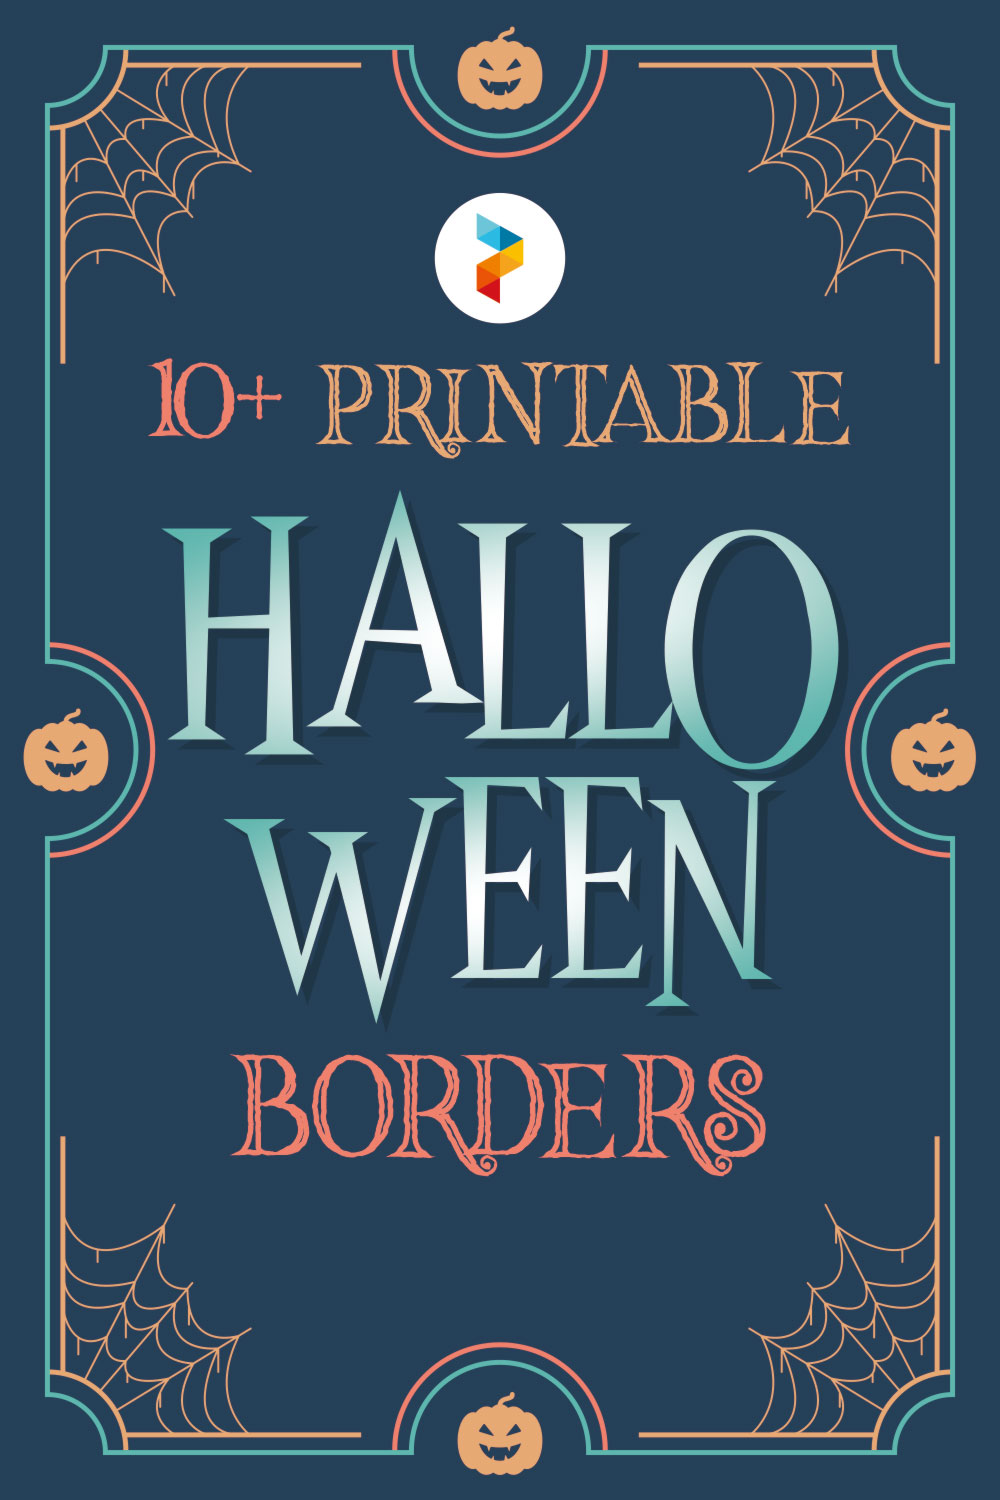 Printable Halloween Borders